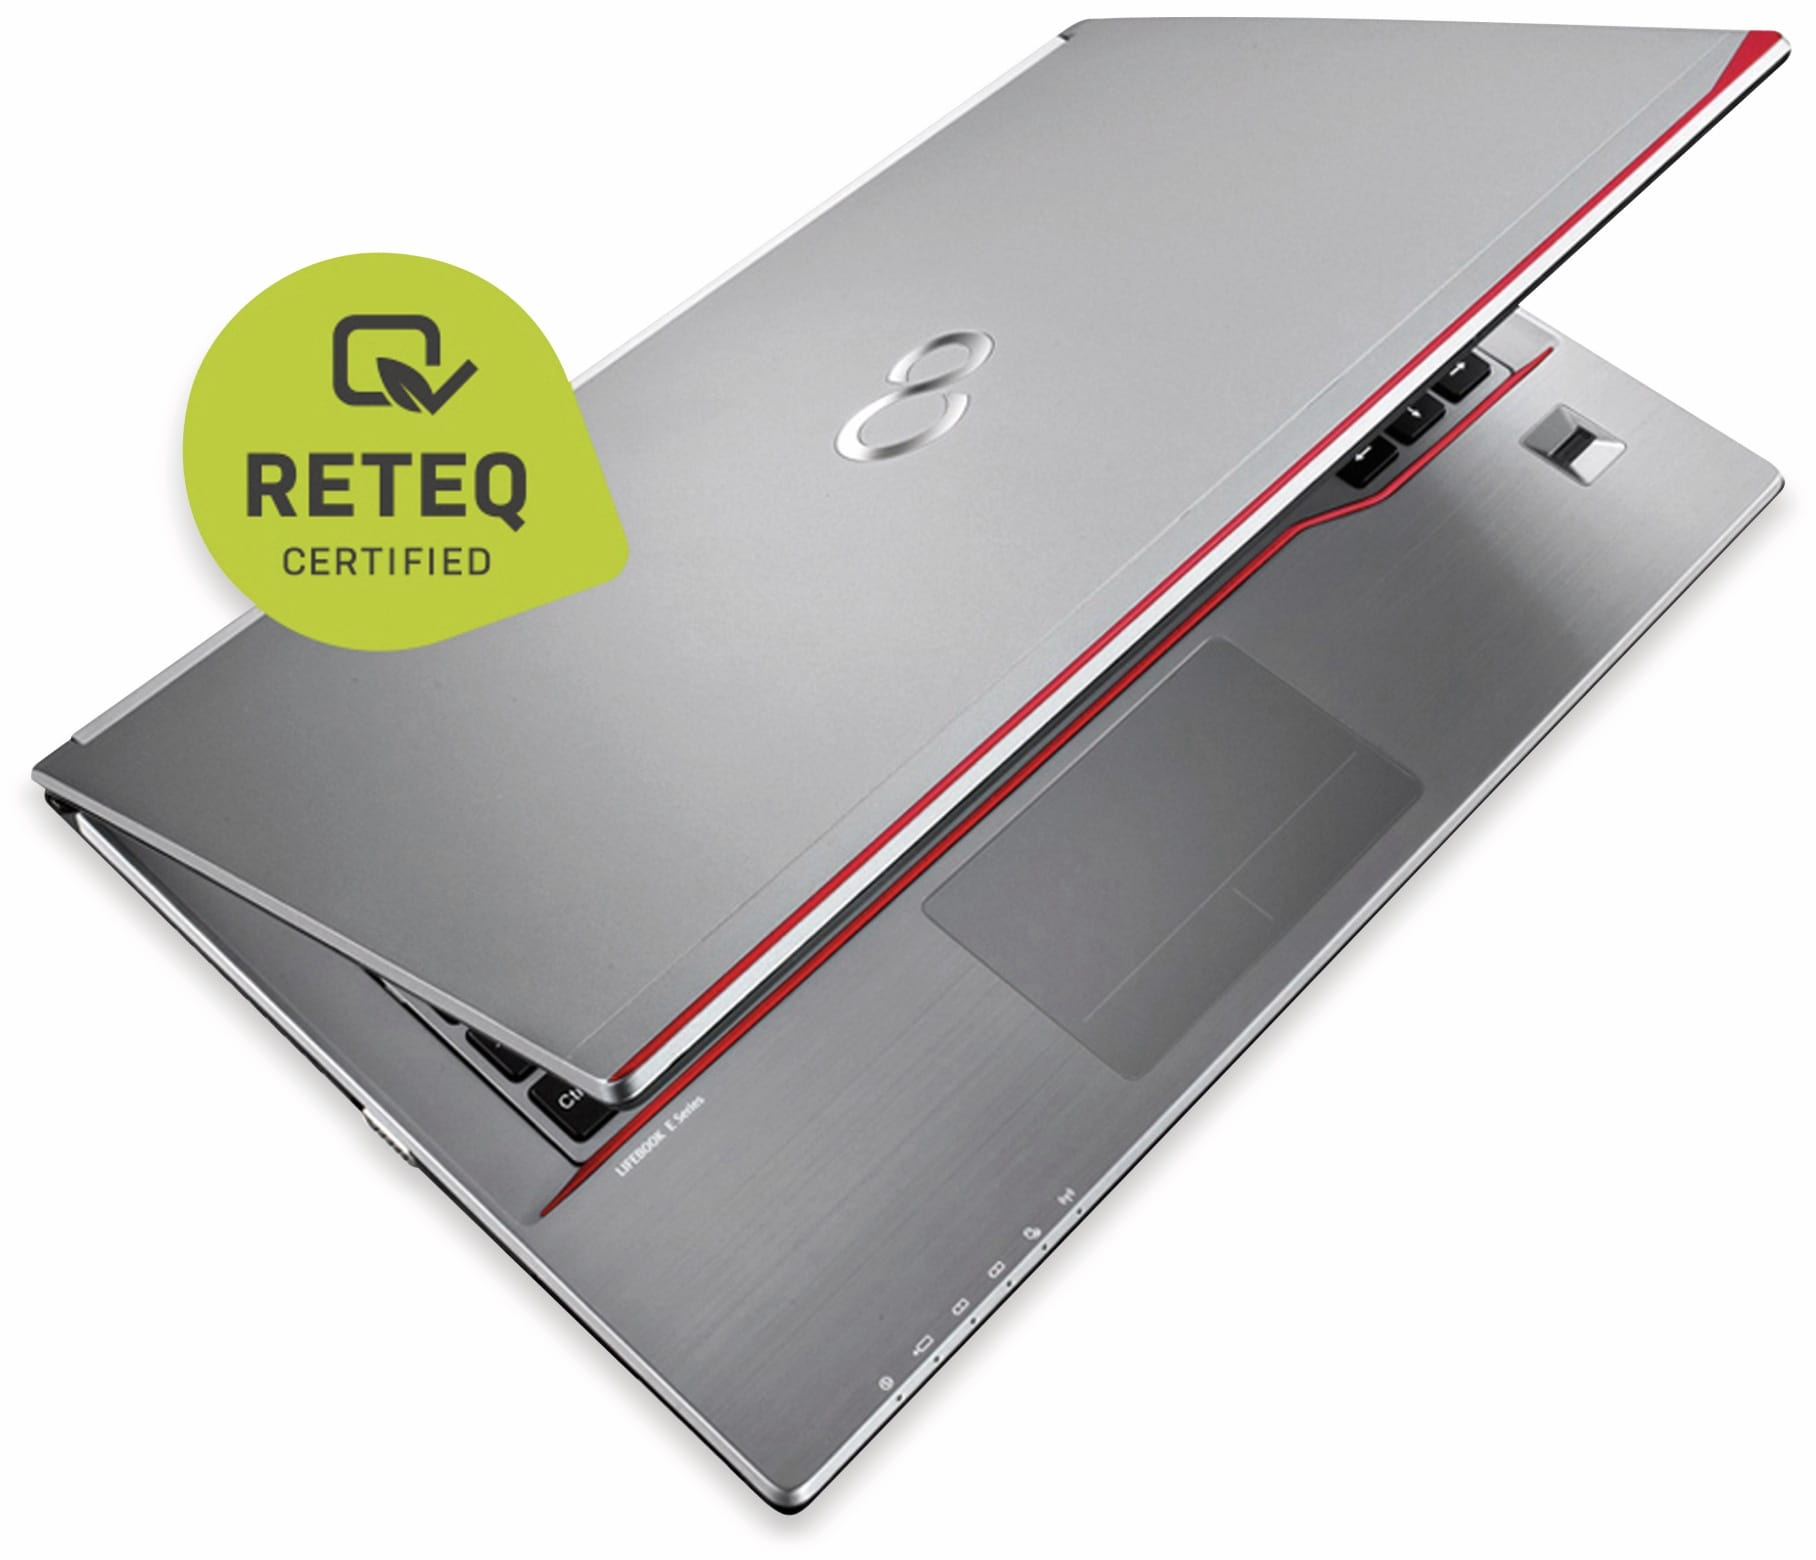 FUJITSU Notebook Lifebook E736, 33,8 cm (13,3"), Intel i5, 8GB RAM, Win10P, Refurbished